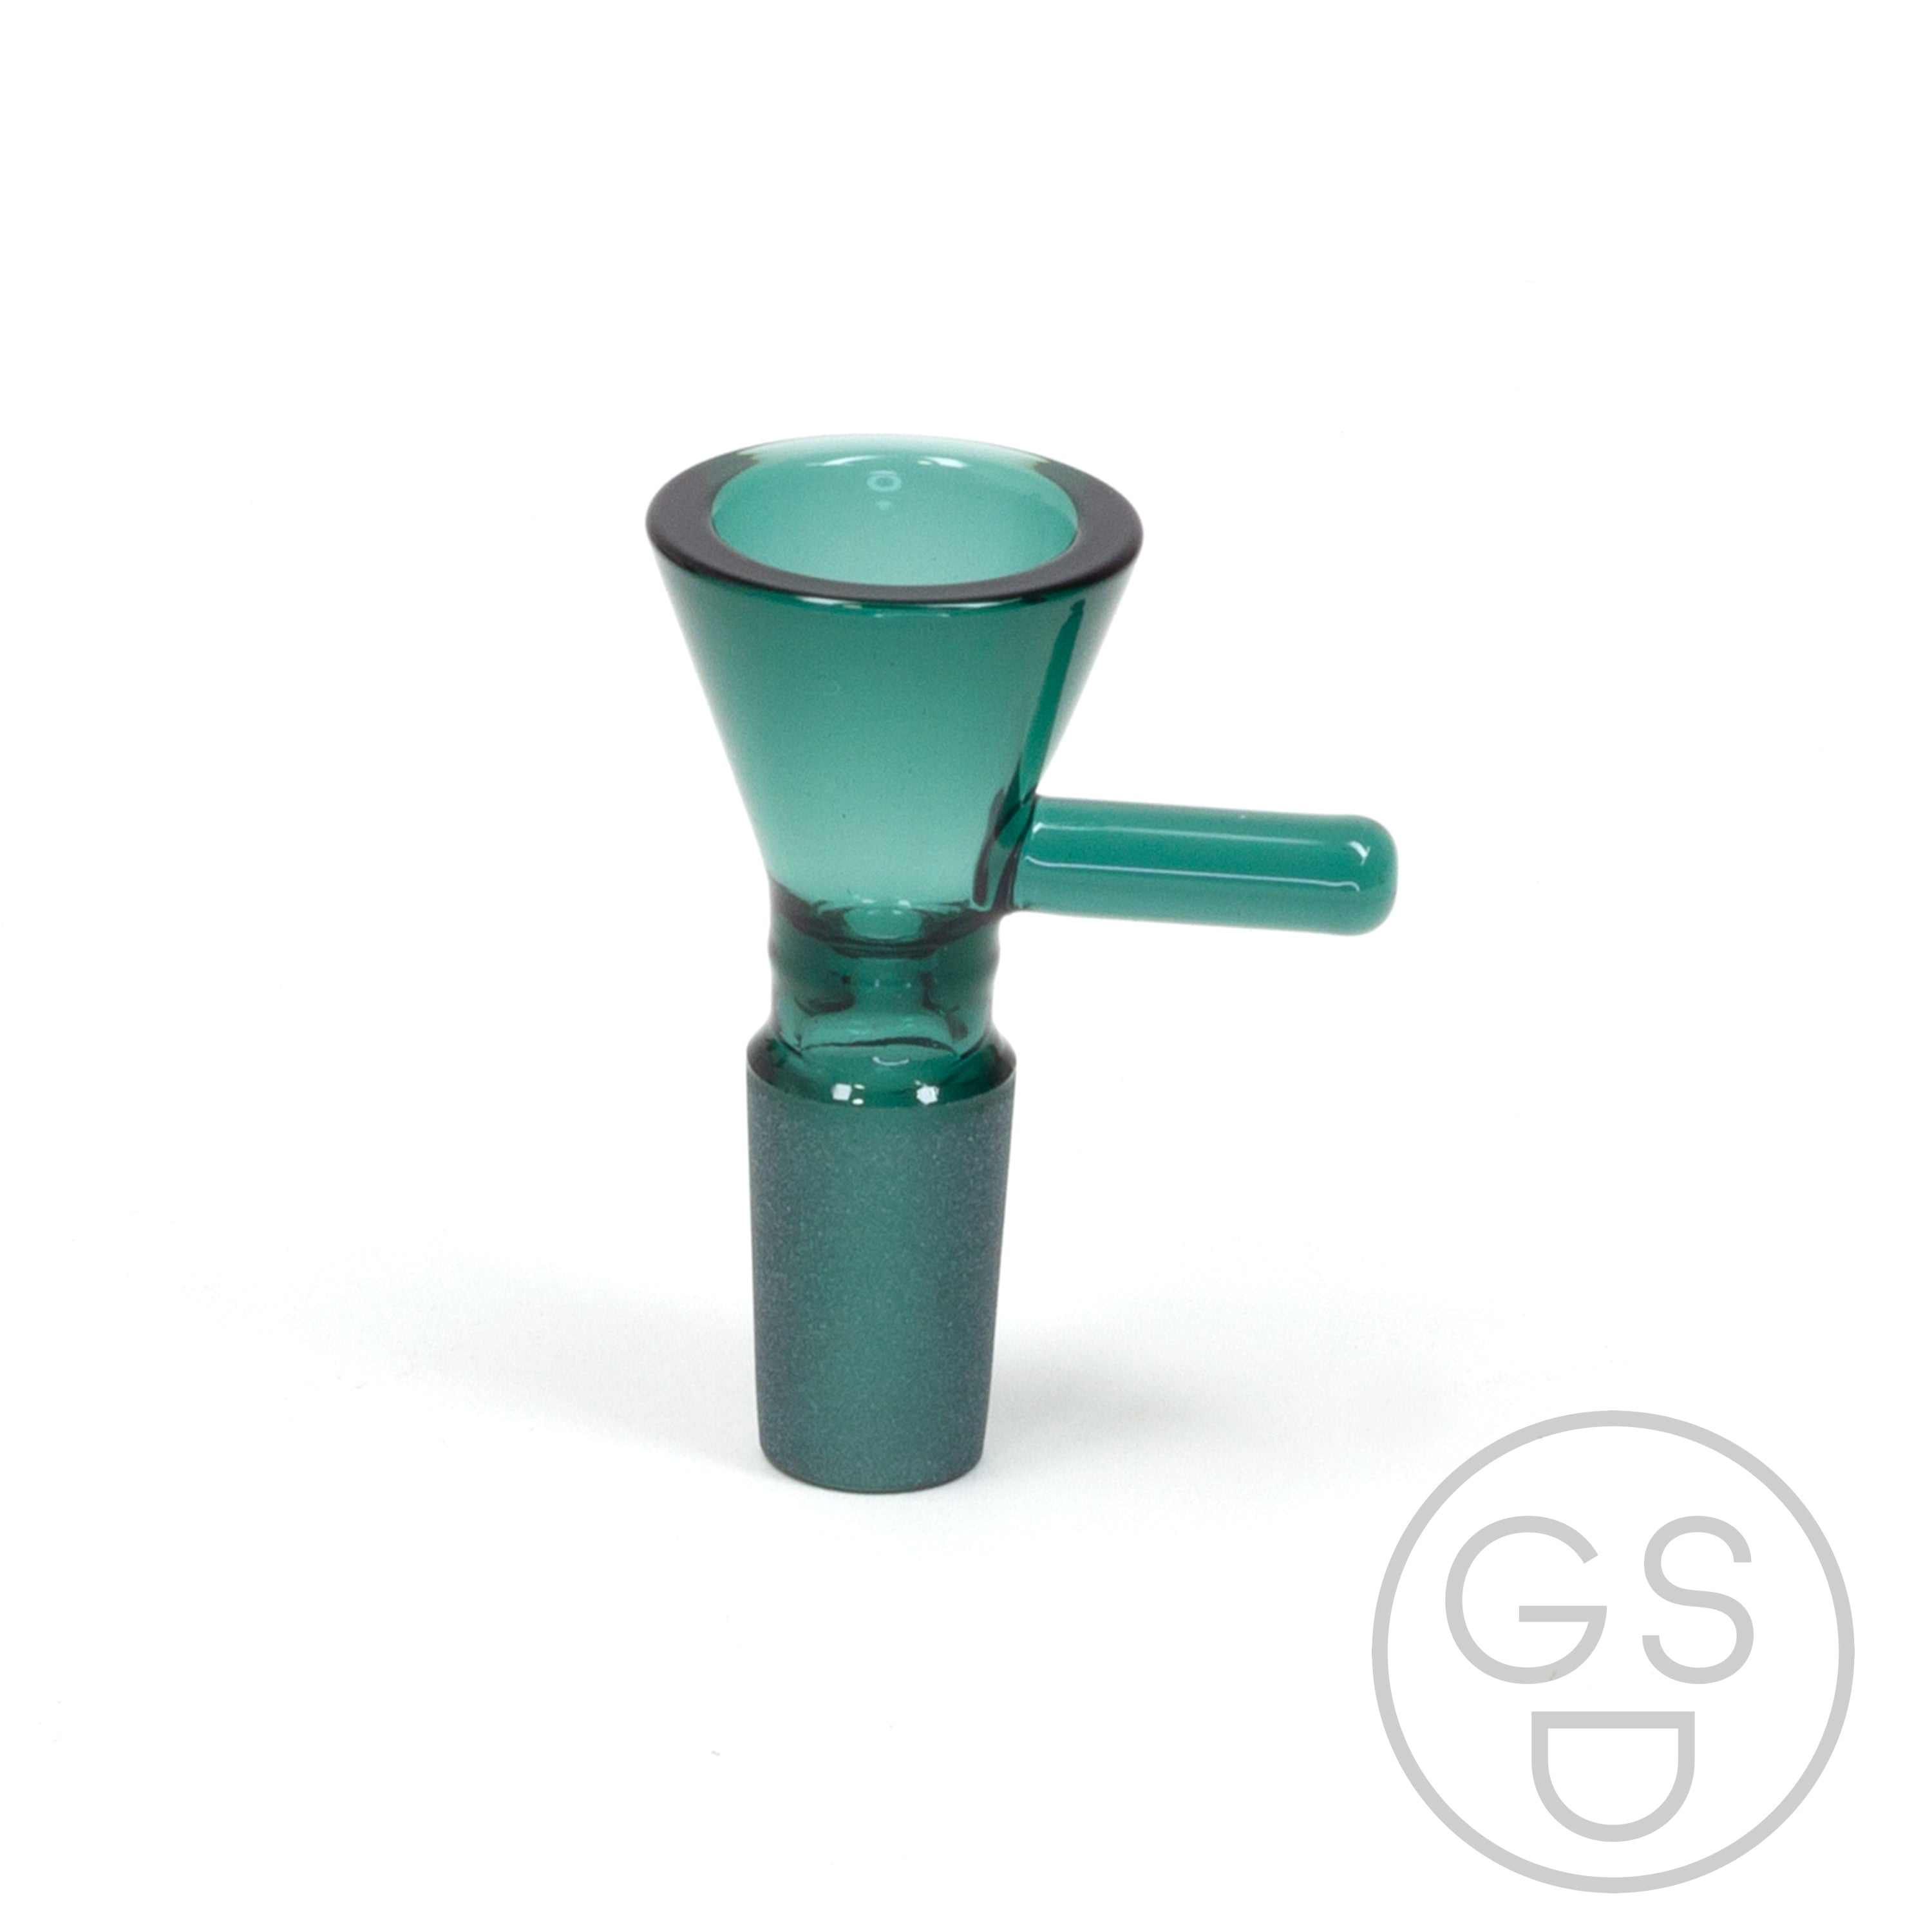 Prism Modular Waterpipe Bowl - Transparent / Teal